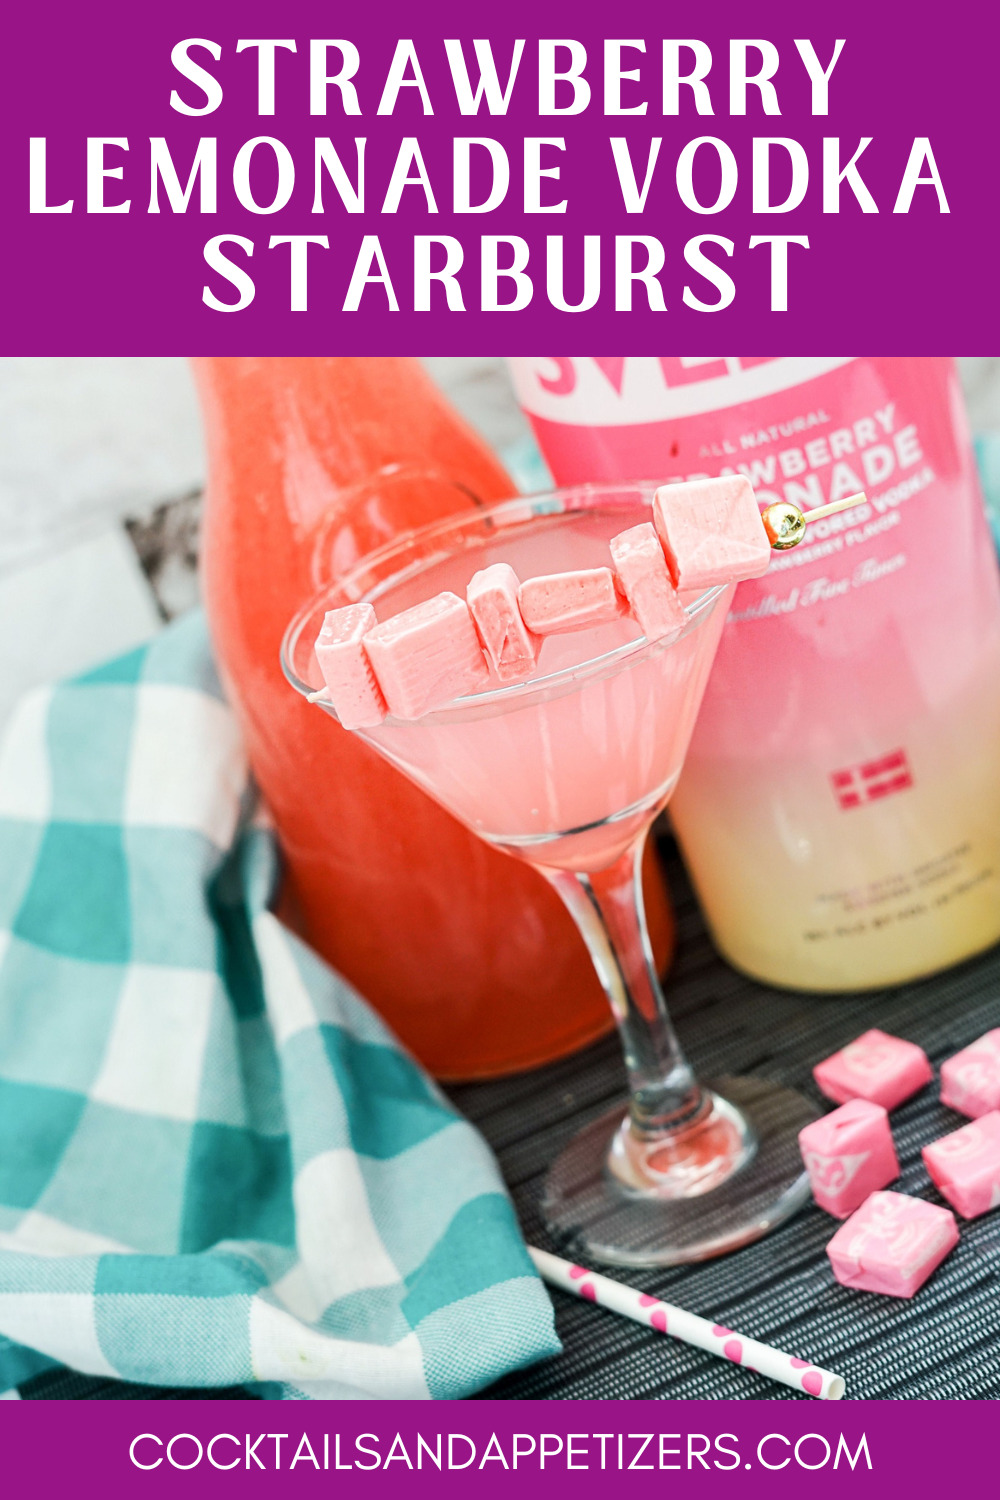 Strawberry Lemonade Vodka Starburst drink in a martini glass.